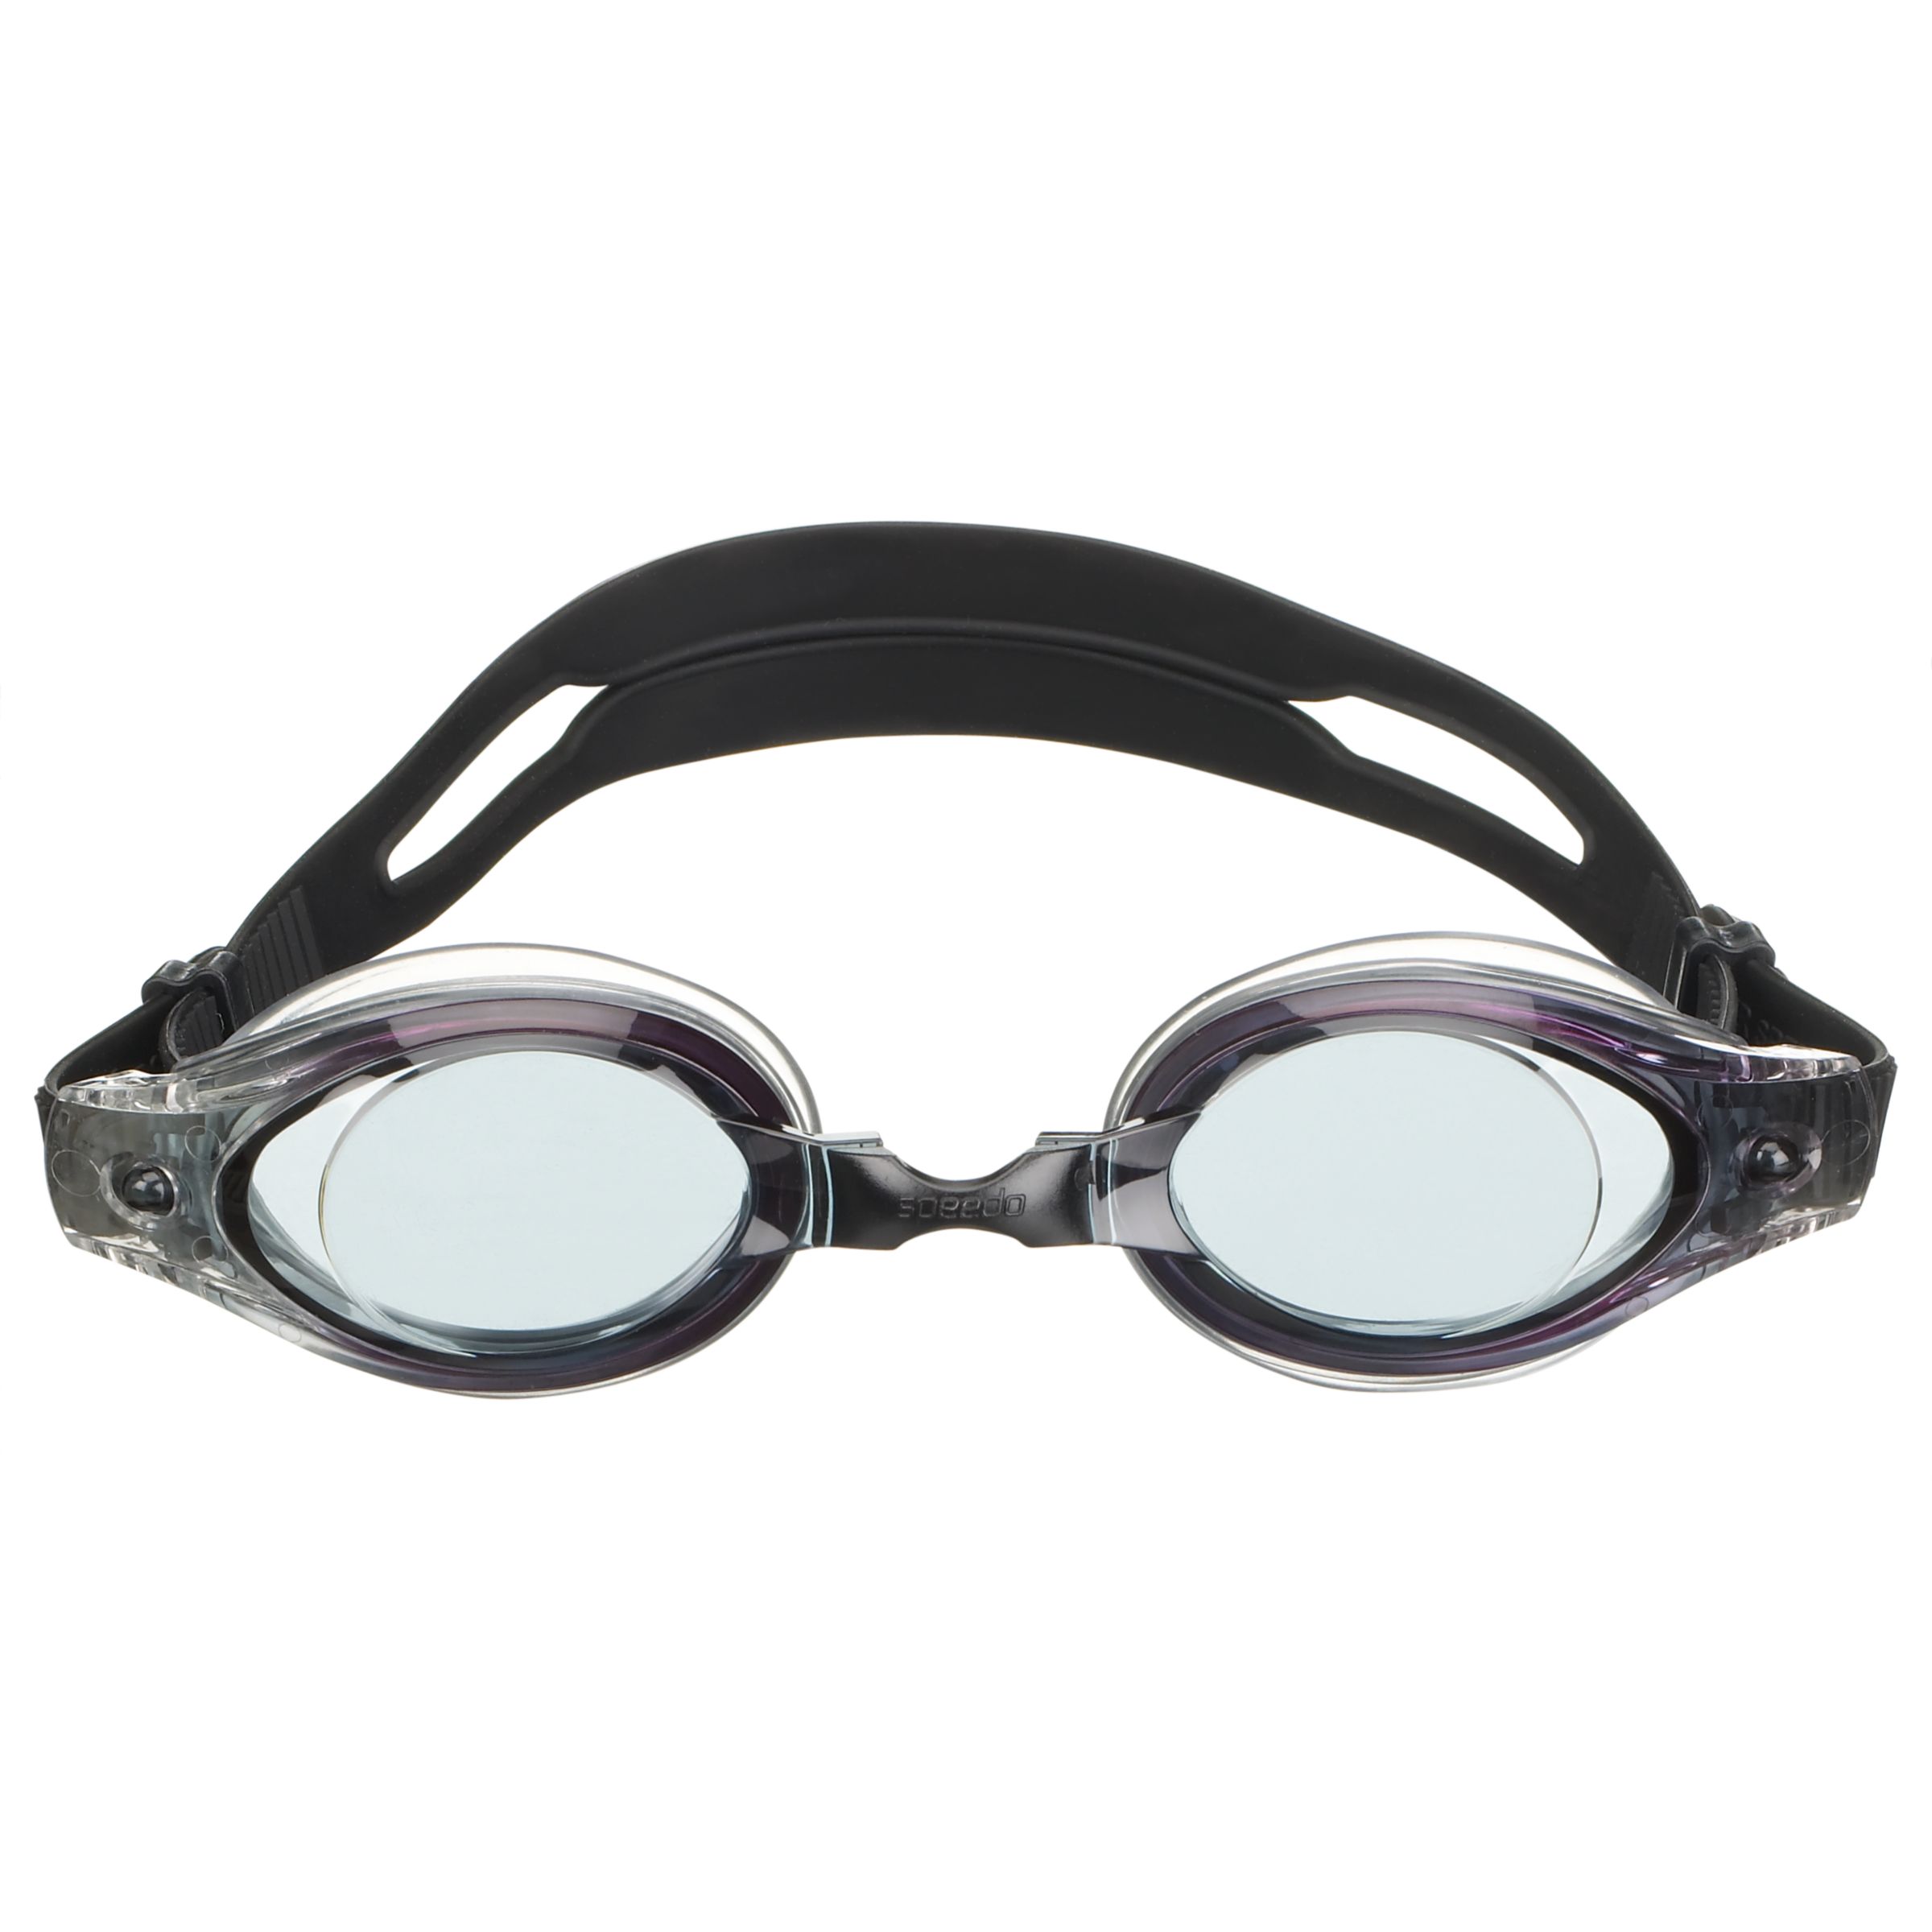 Speedo Mariner Speed Fit Swimming Goggles, Black